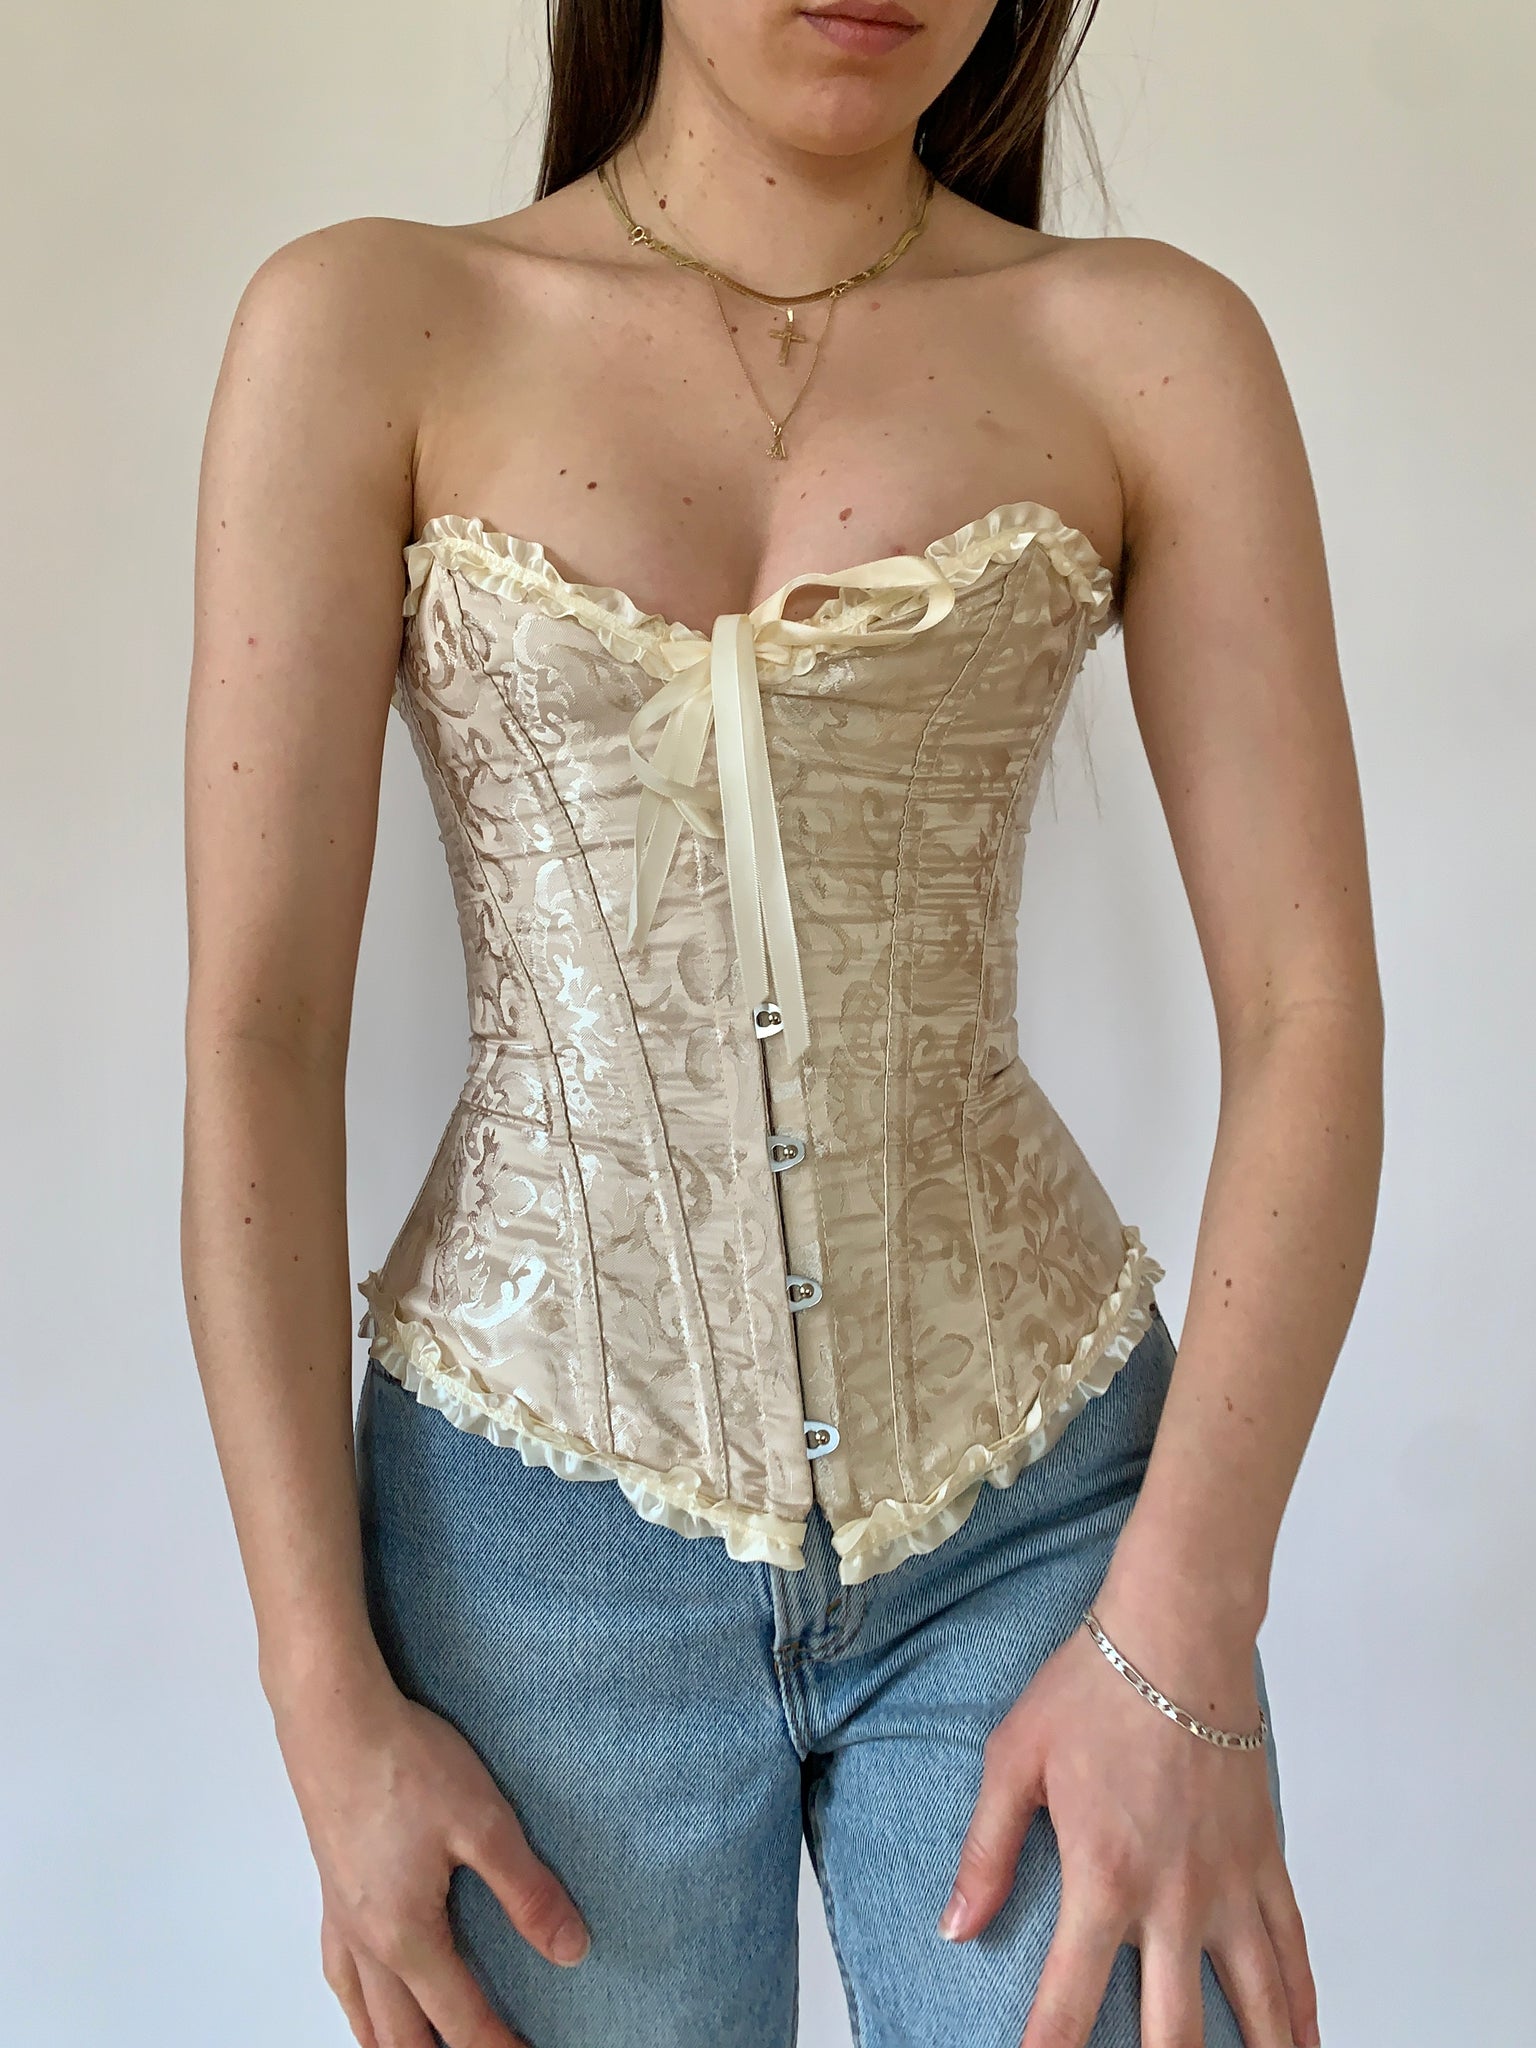 Gorteks Charlize lace half-corset push-up cream Classic collection